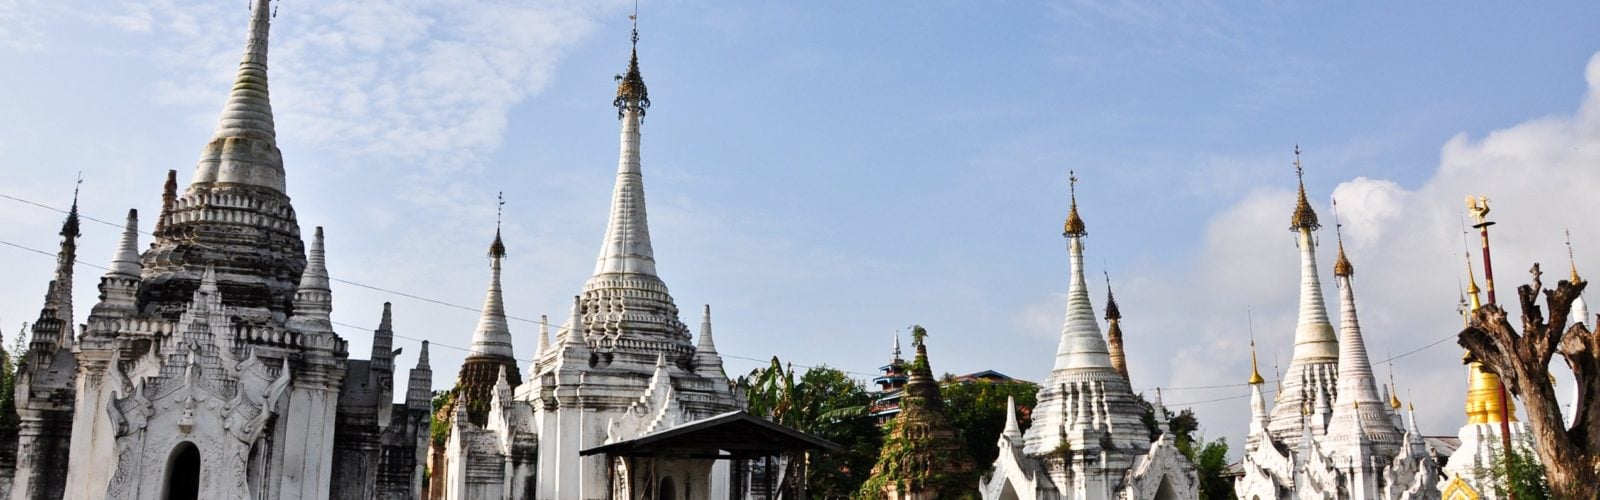 shwe-indein-pagoda